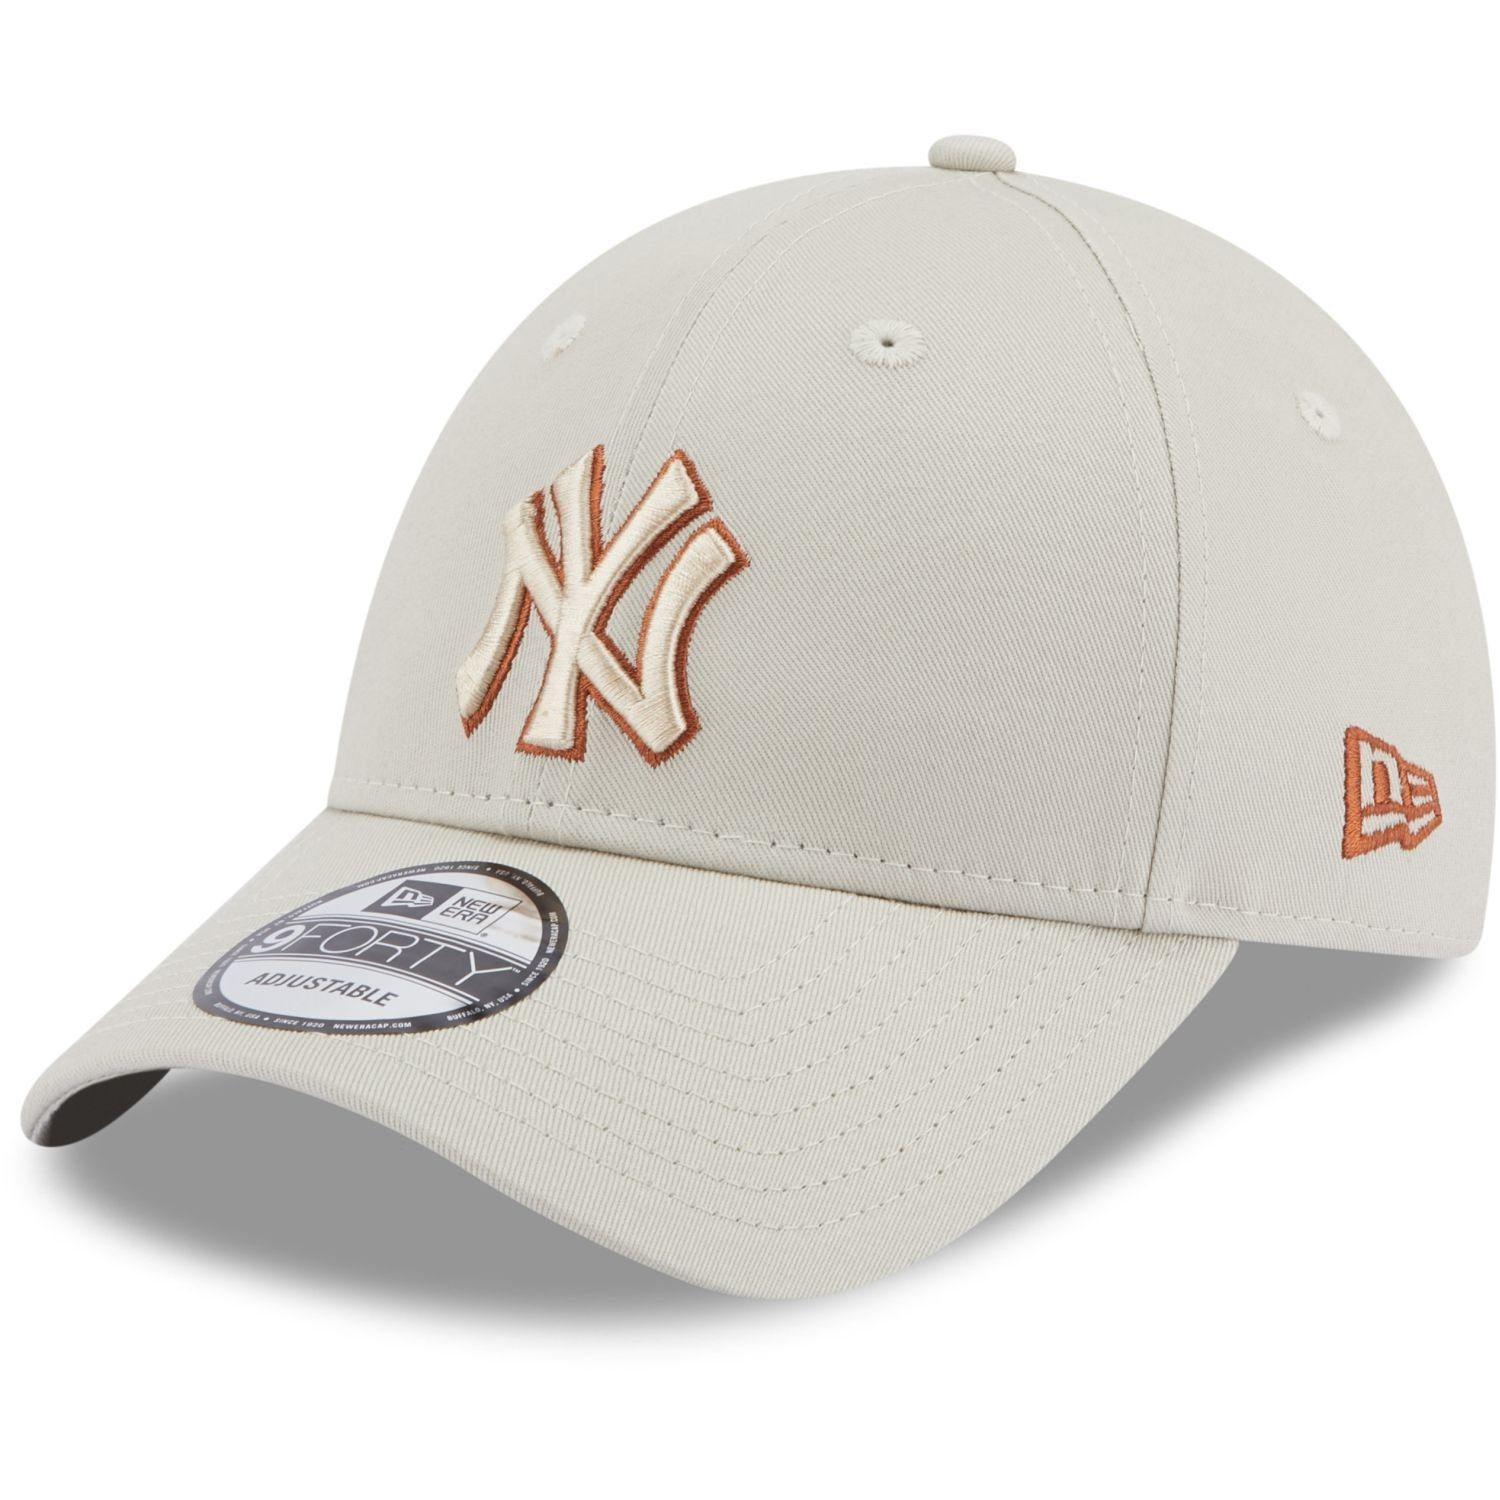 Cap New Strapback 9Forty Era beige New Yankees York OUTLINE Baseball